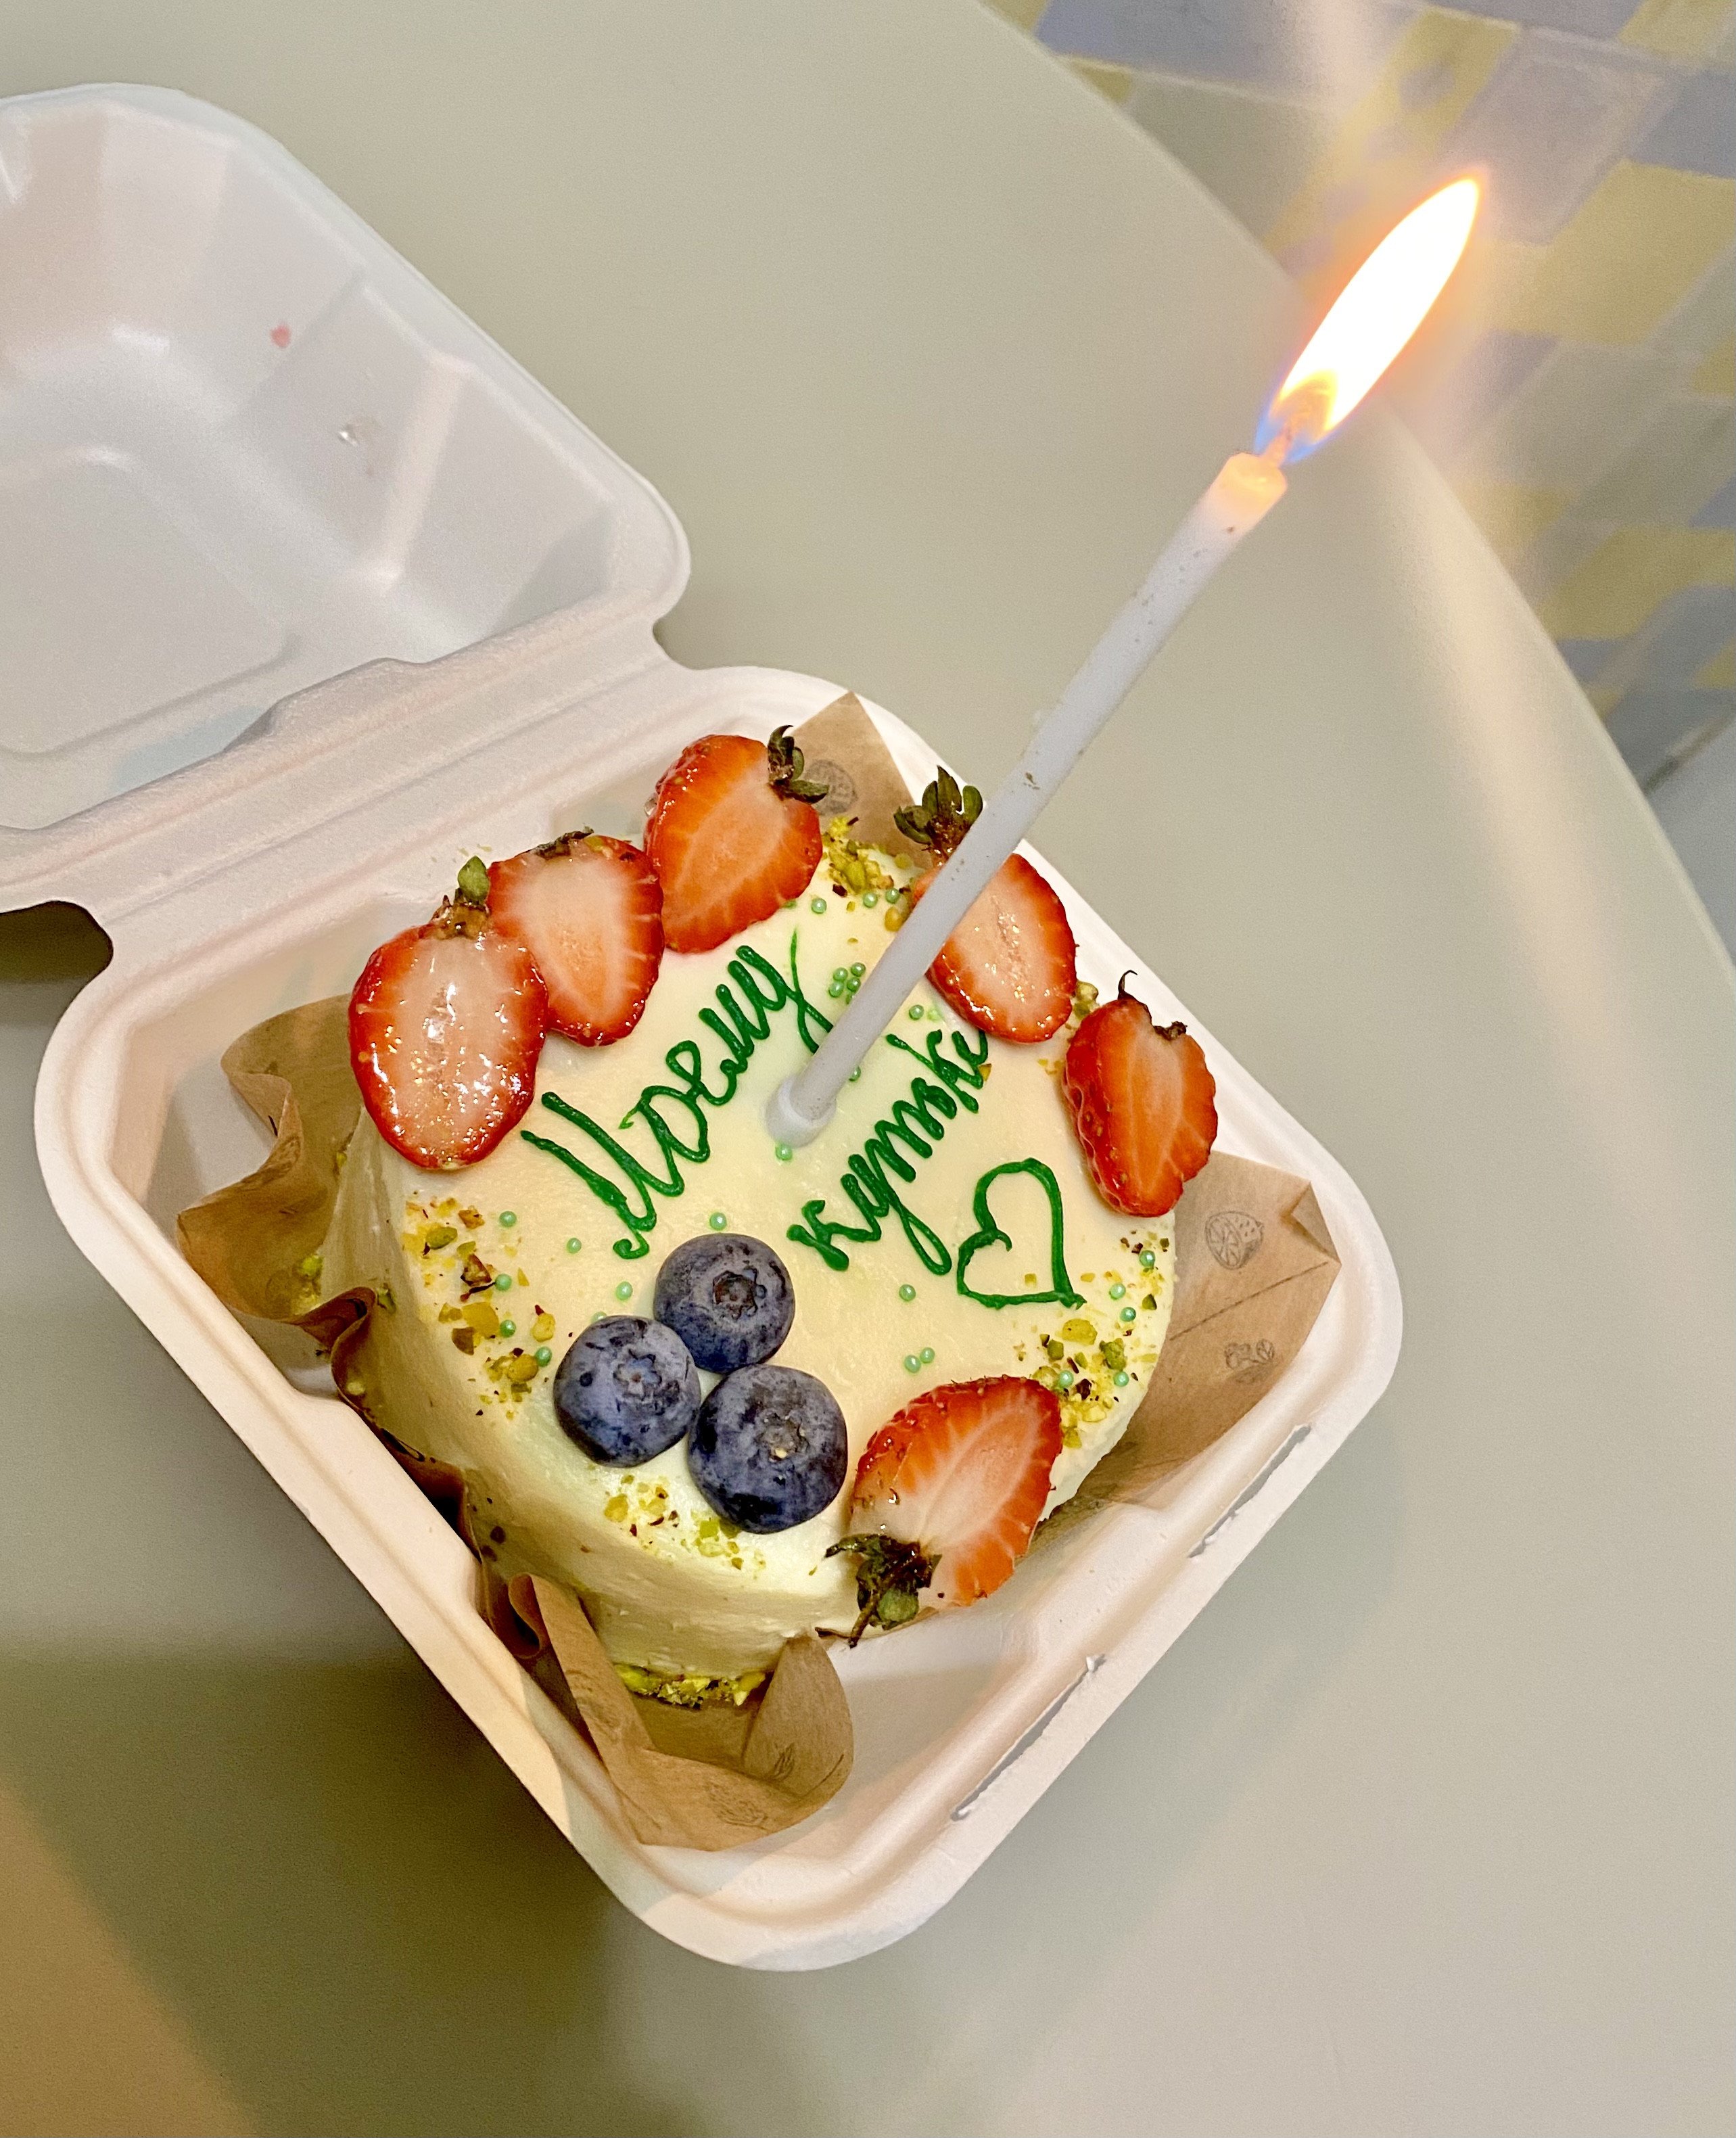 Бенто торт заказать москва с доставкой. Бенто тортик. Бенто торт на день рождения. Бенто торт любимому на день рождения. Бенто торт на день рождения мужу.